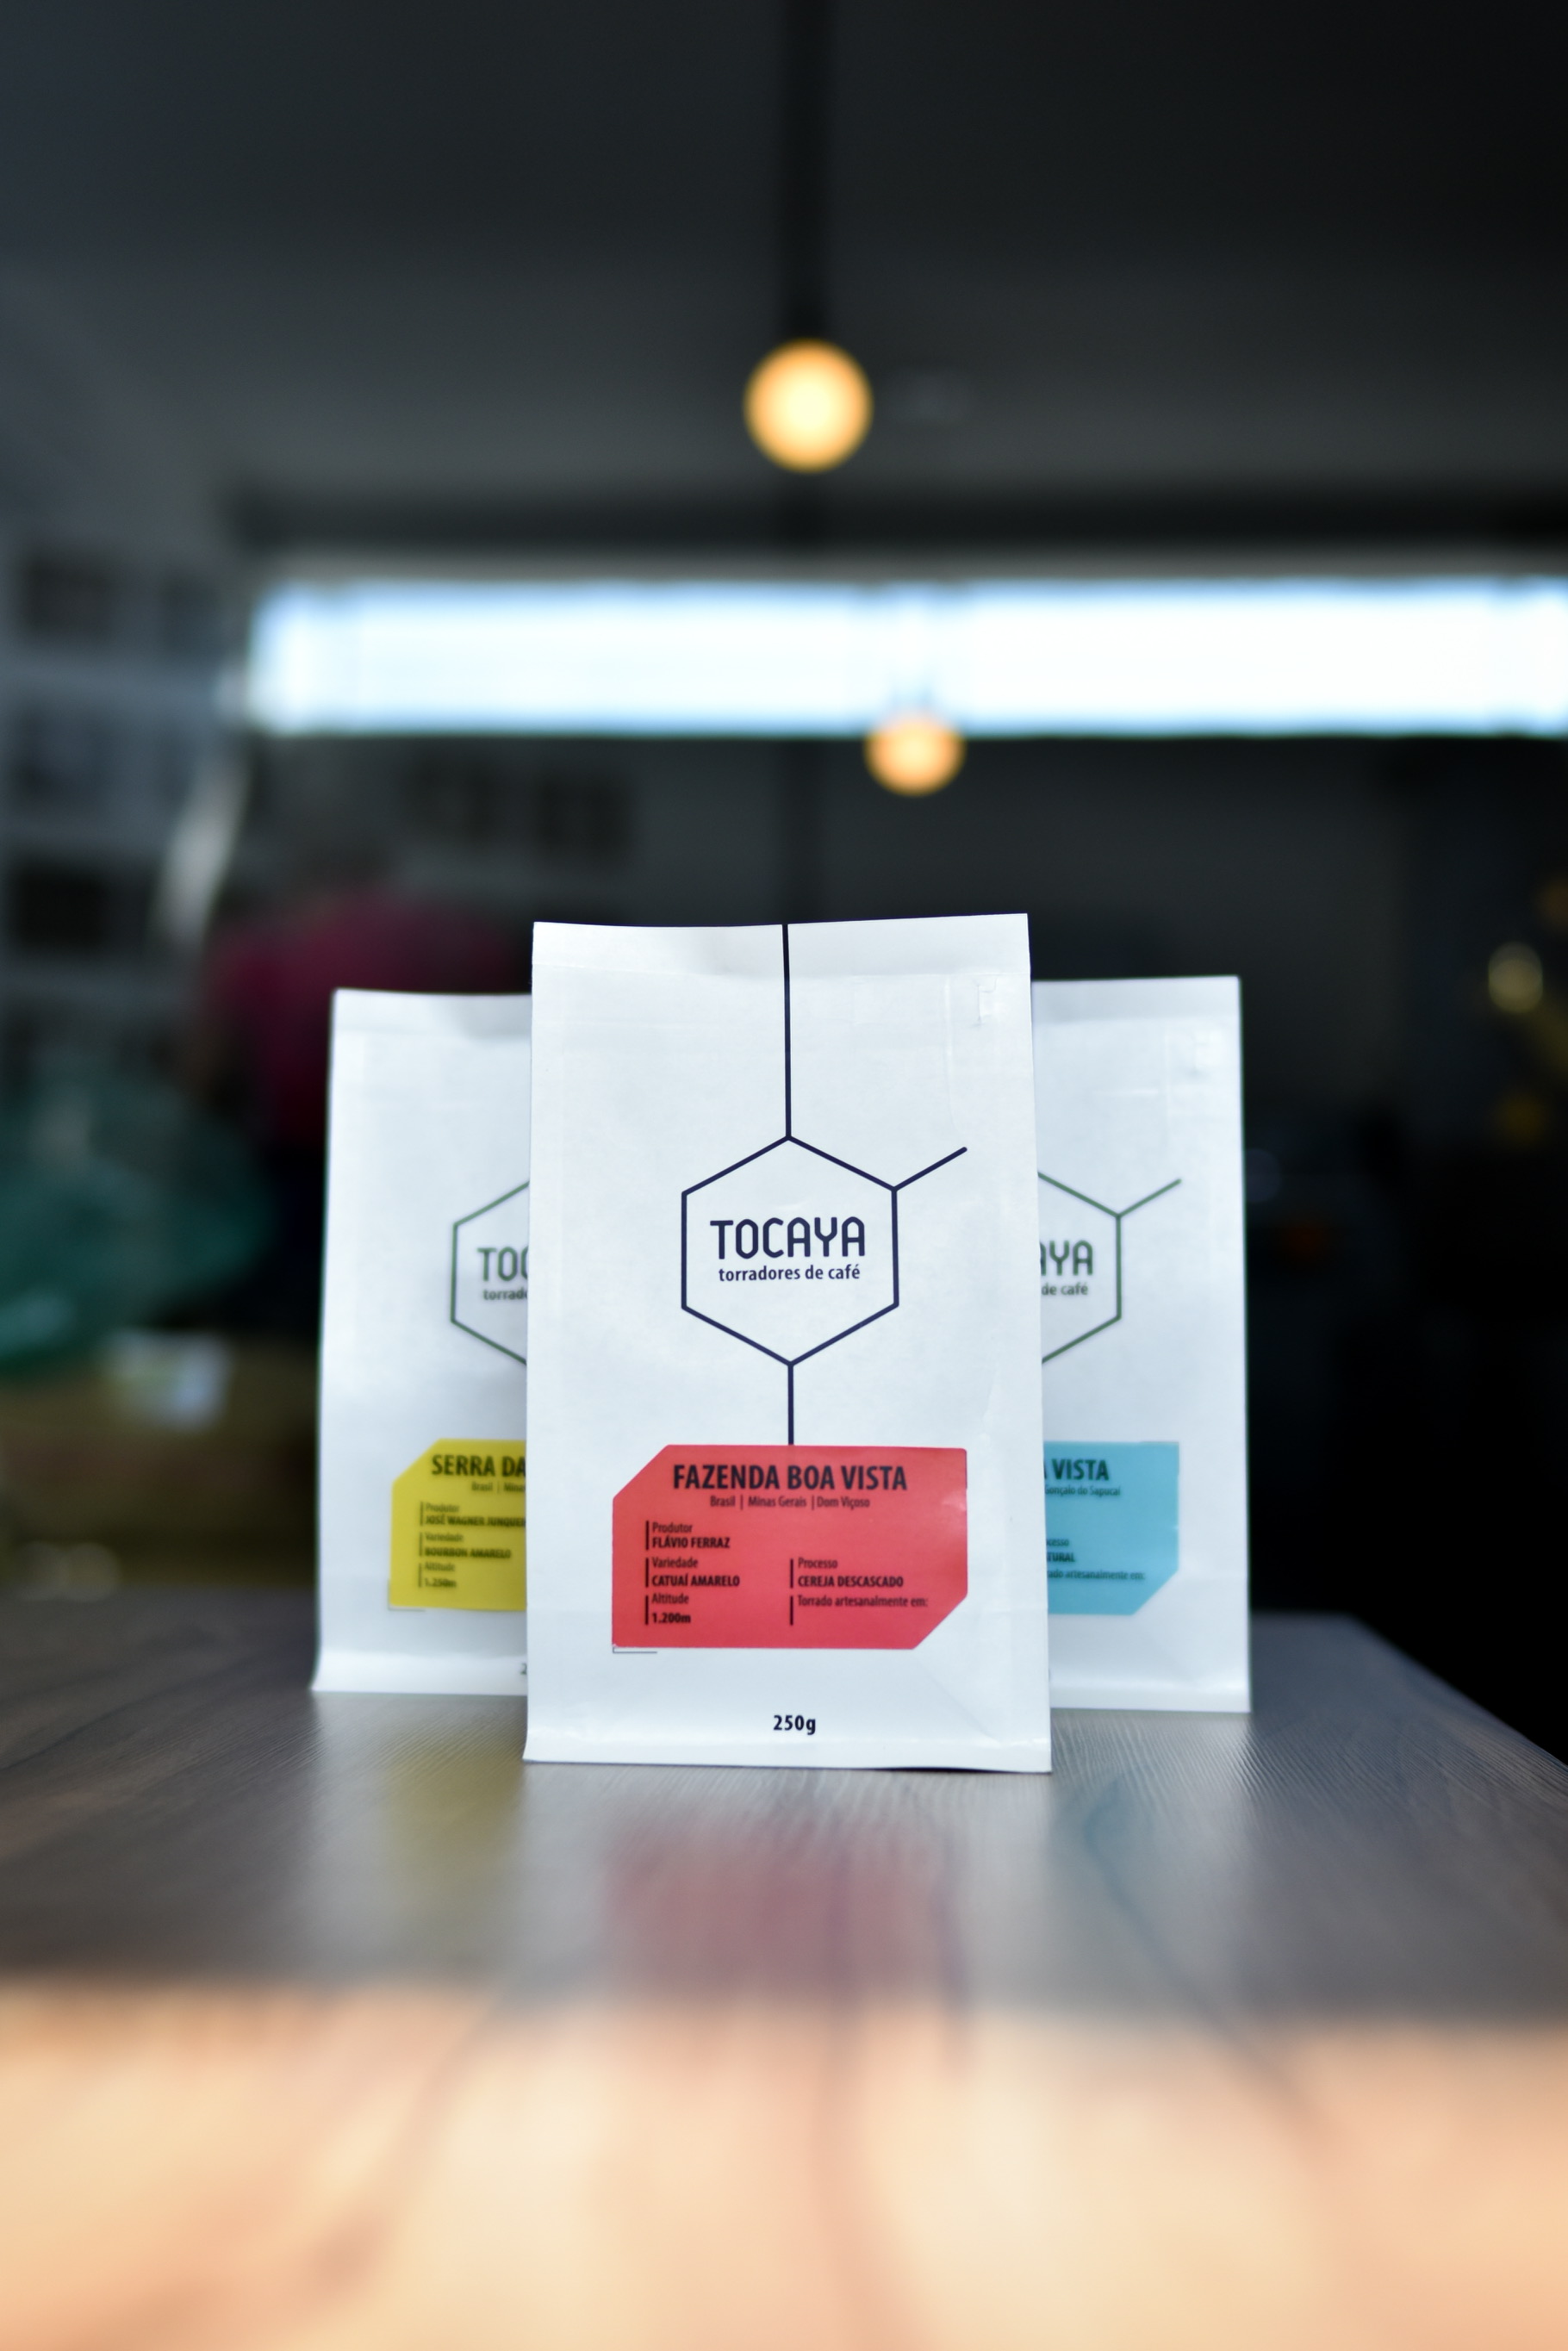 Packaging Design for Tocaya Torradores de Café